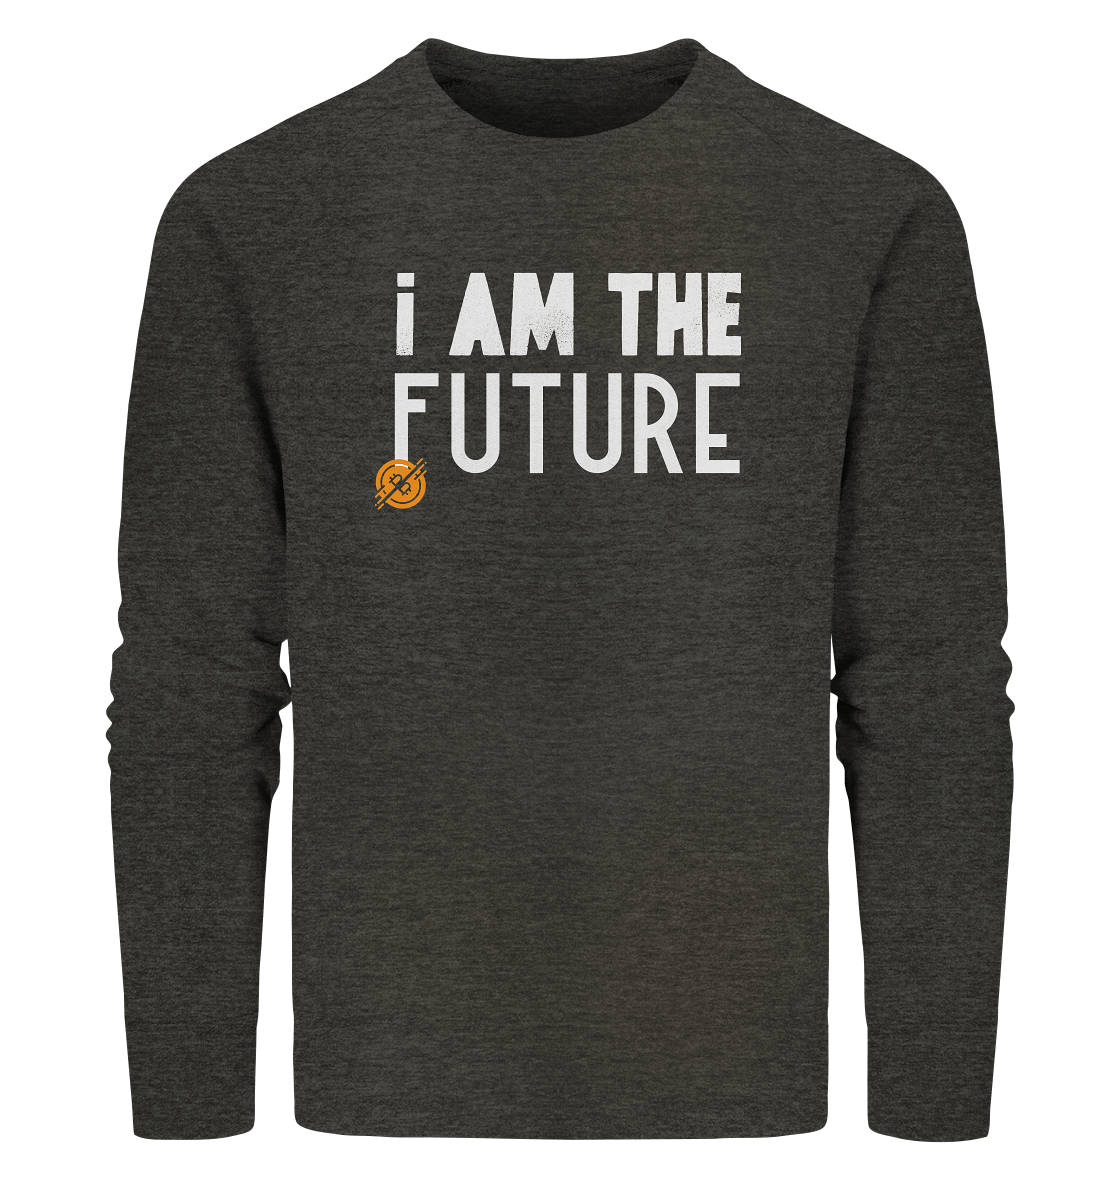 Bitcoin Sweatshirt "I am the future" - Organic Sweatshirt